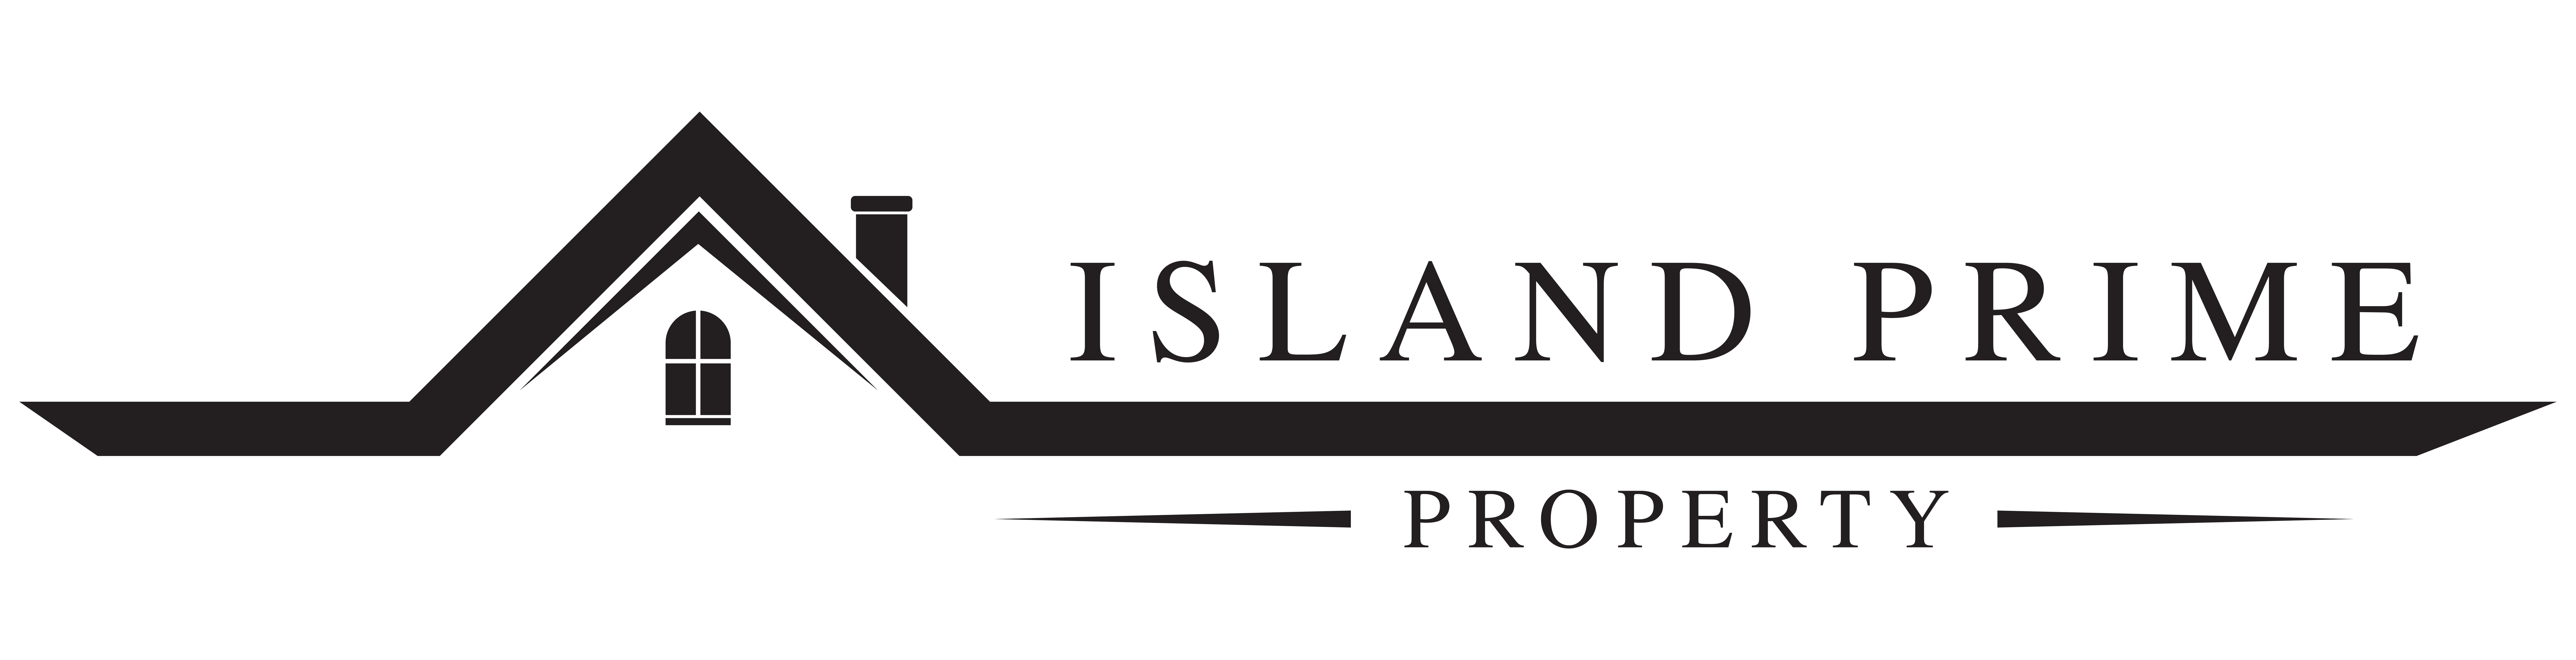 Estate agency logo for Island Prime Property